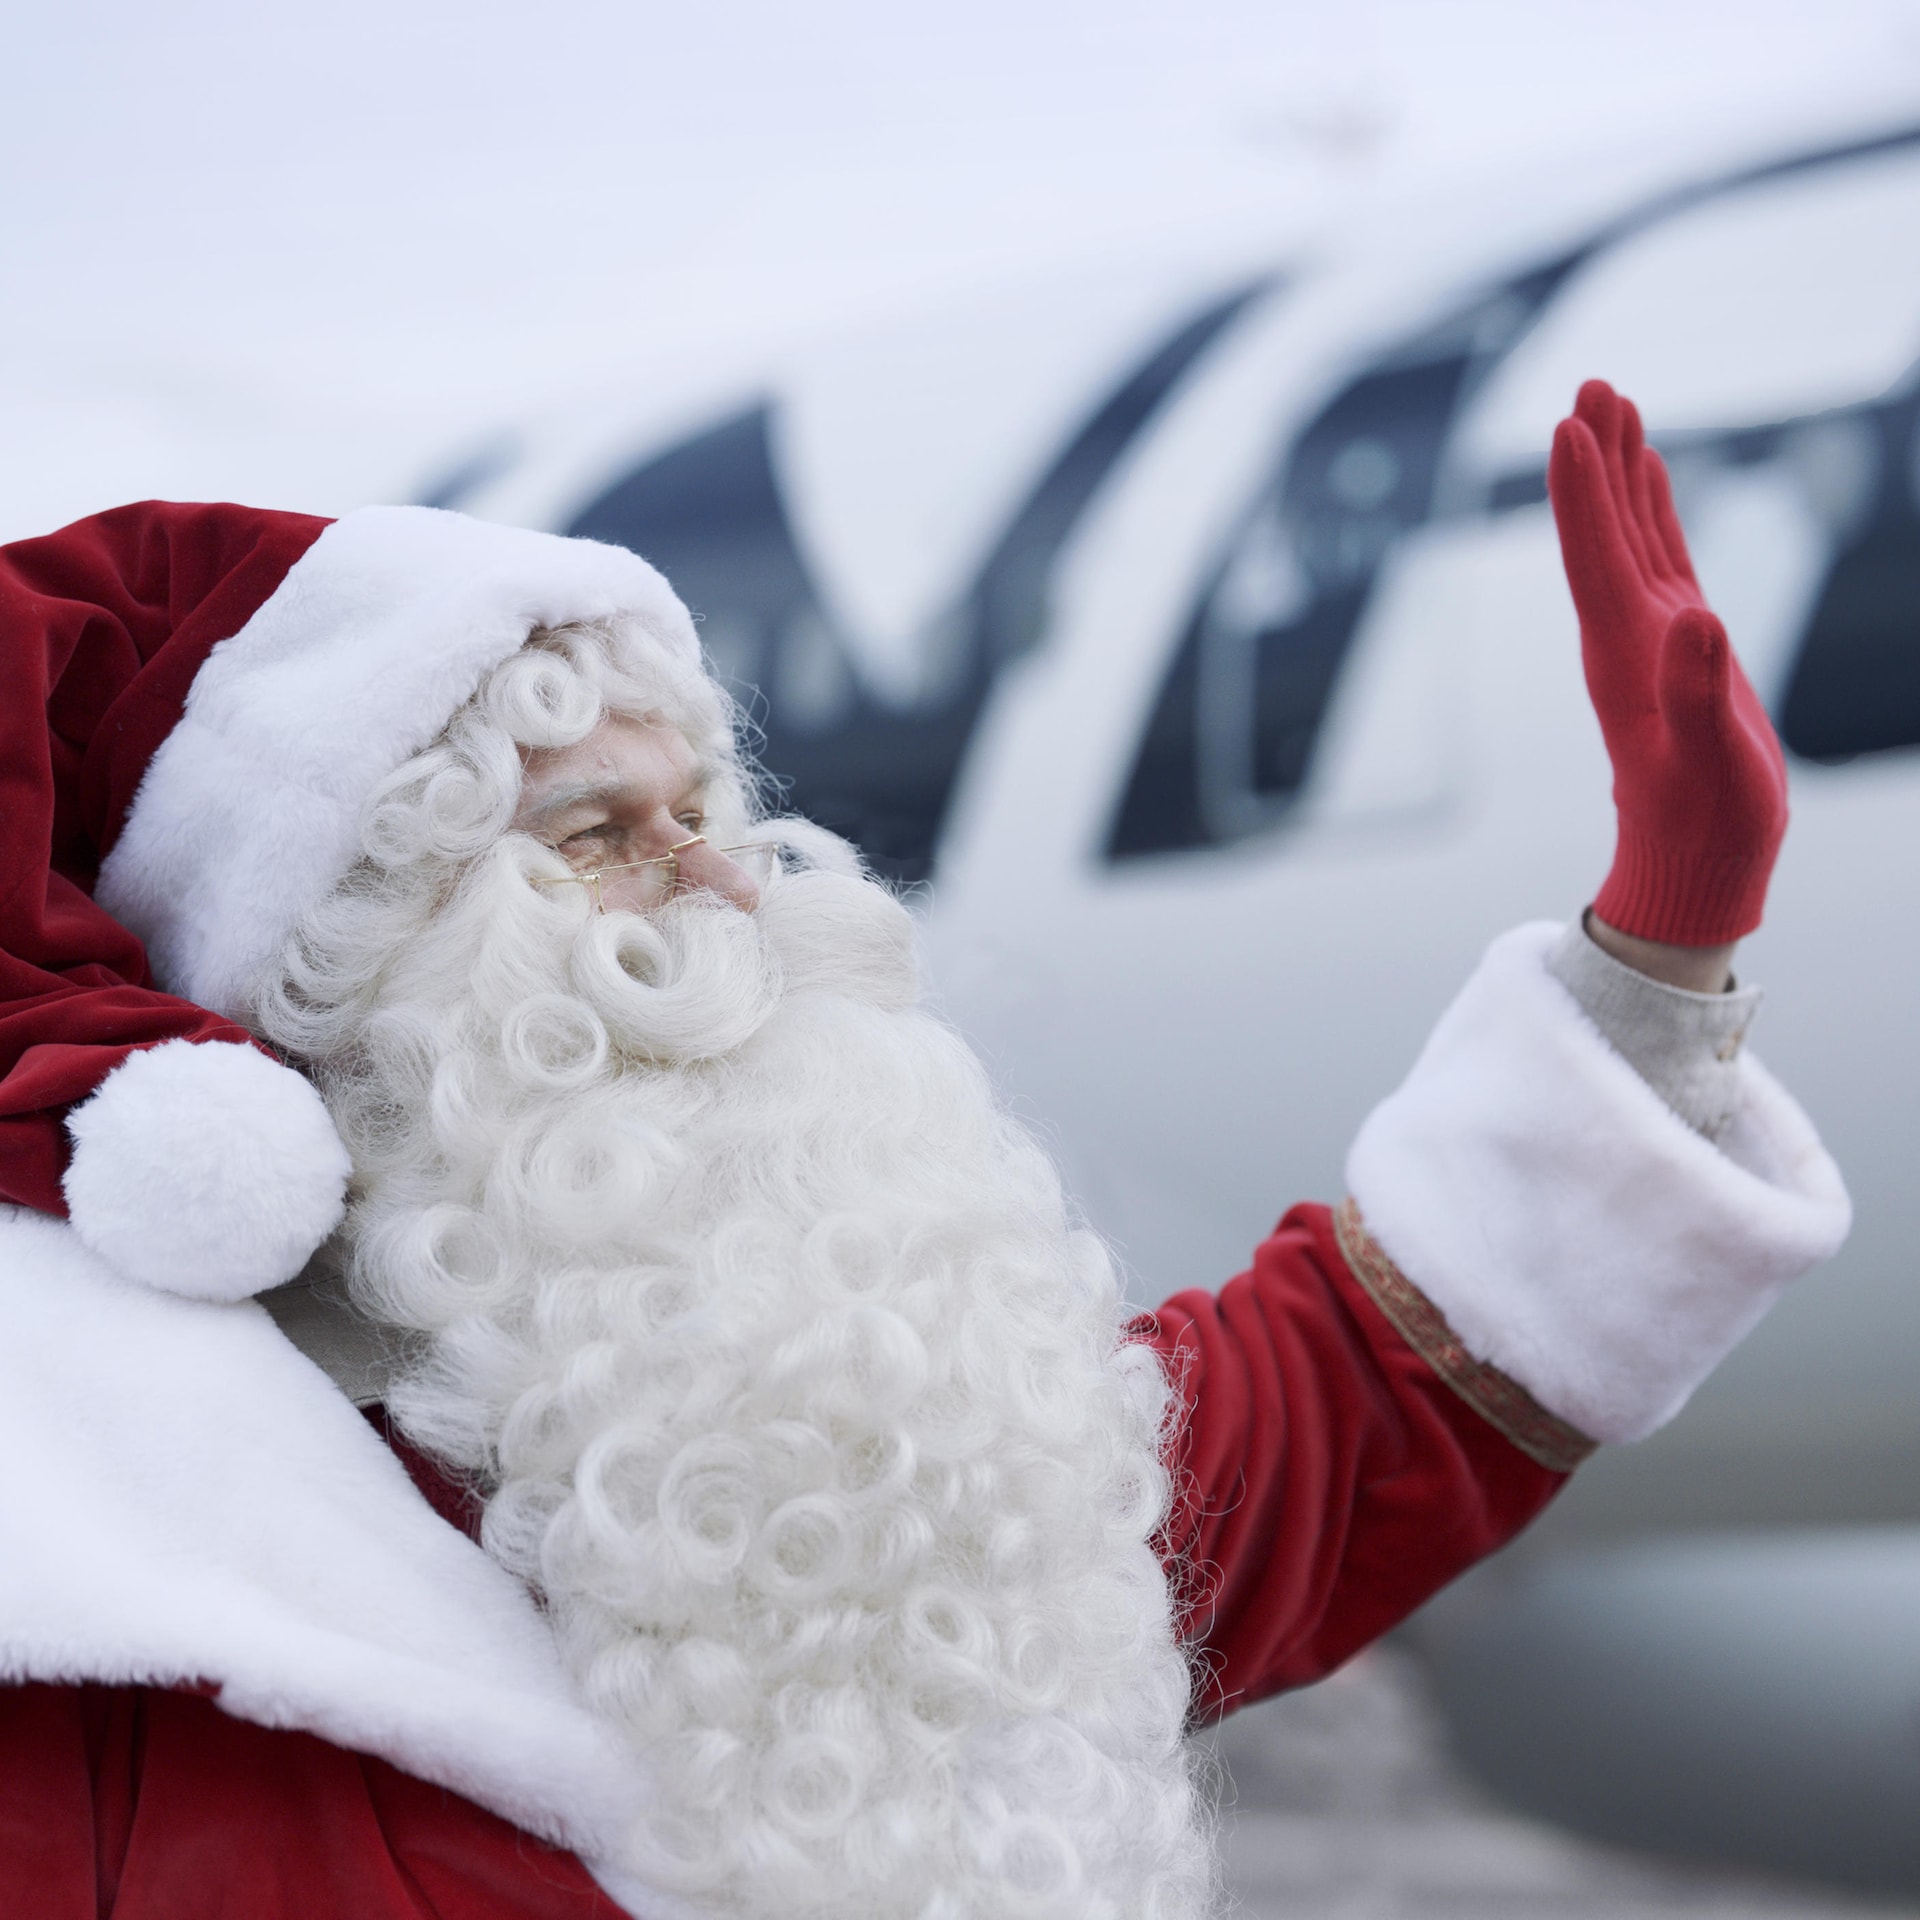 Finnair is still Santa's favourite airline